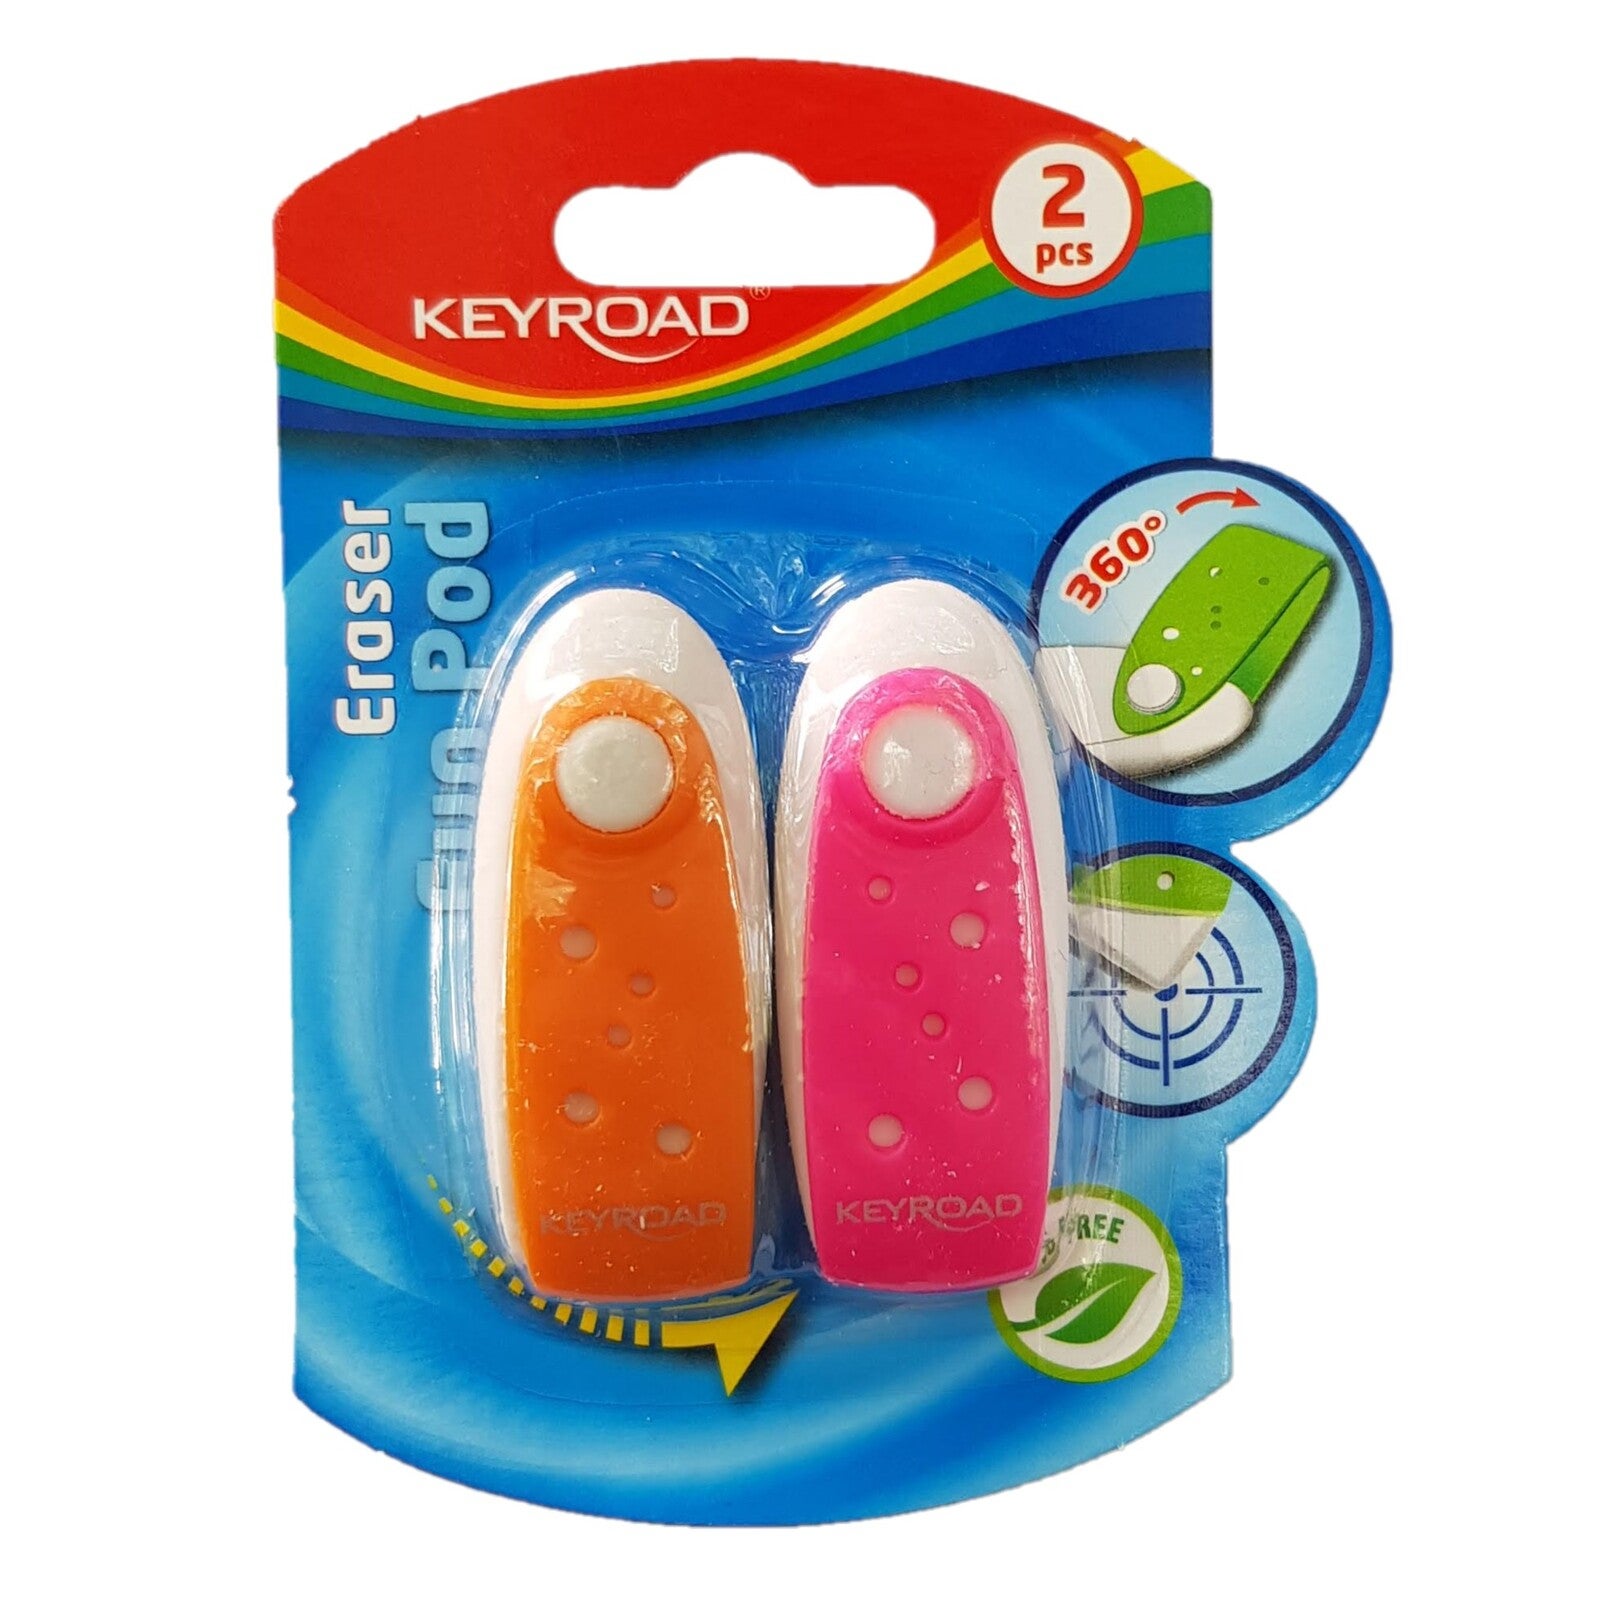 New 2pce Keyroad Eraser Fun Pod 360 Rotate Rubber Drawing School Essential